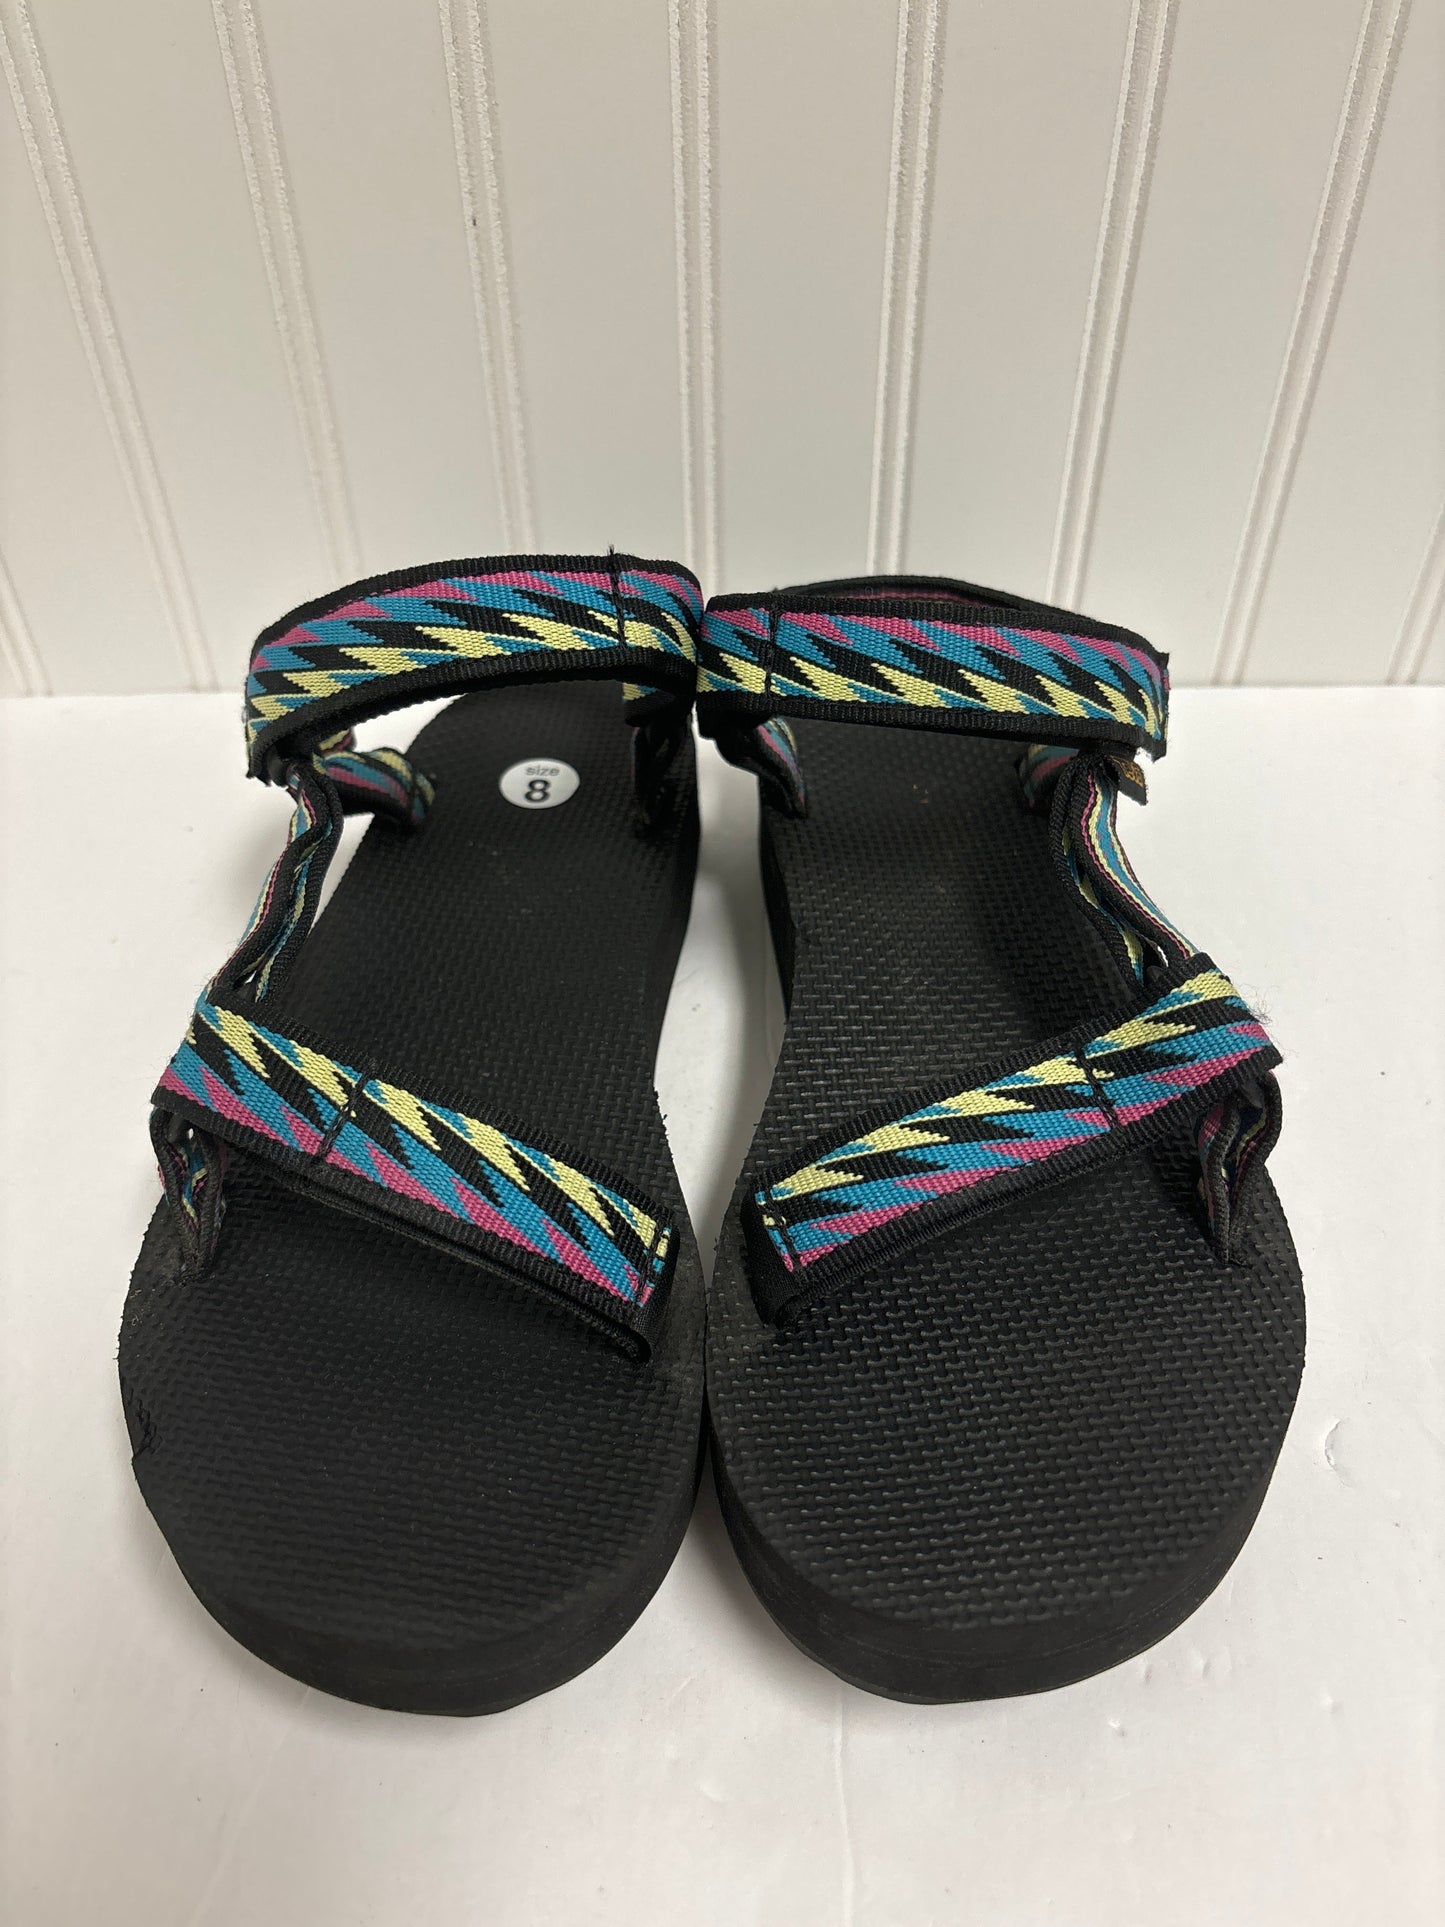 Black Sandals Flats Teva, Size 8